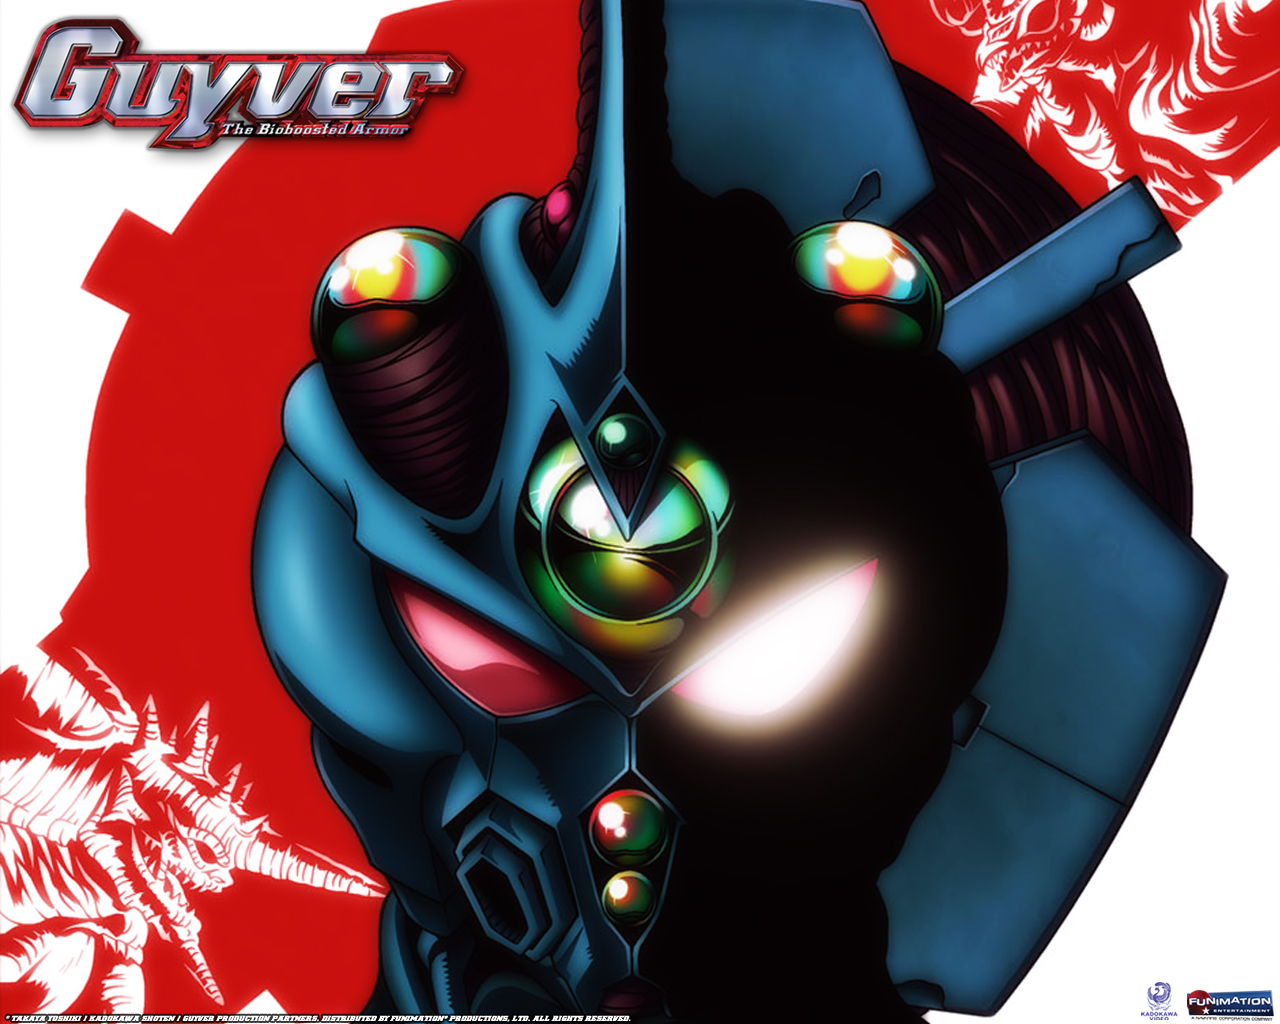 Anime: The Guyver: Bio-Booster Armor Year: 1989 #TheGuyverBioBoosterArmor  #ninja #samurai #nujabes #lofi #kurama #anime #90sanime… | Instagram